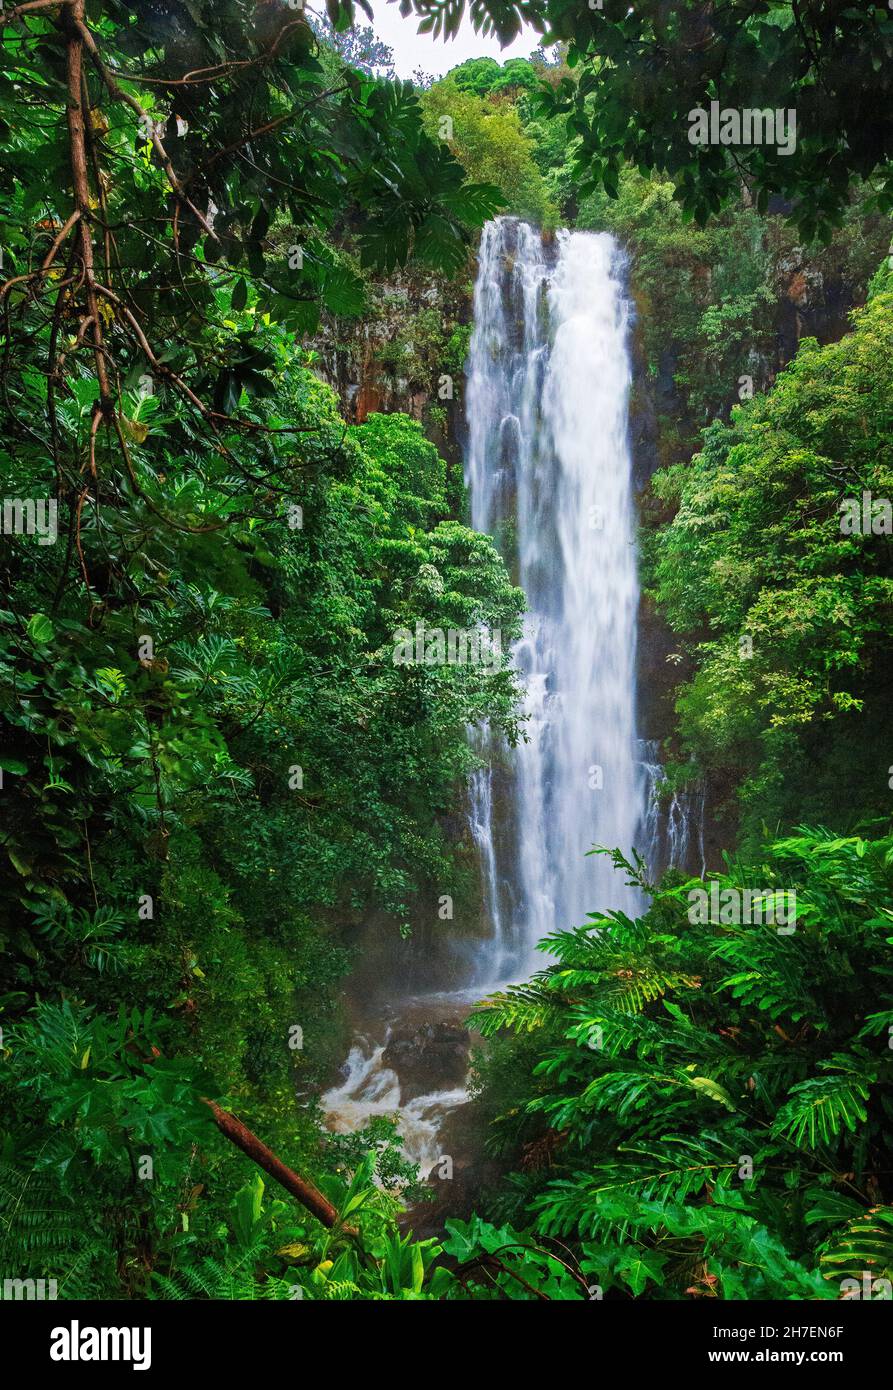 Picturesque Wailua Falls, Hana Highway, Hana Coast, Maui, Hawaii Stock Photo